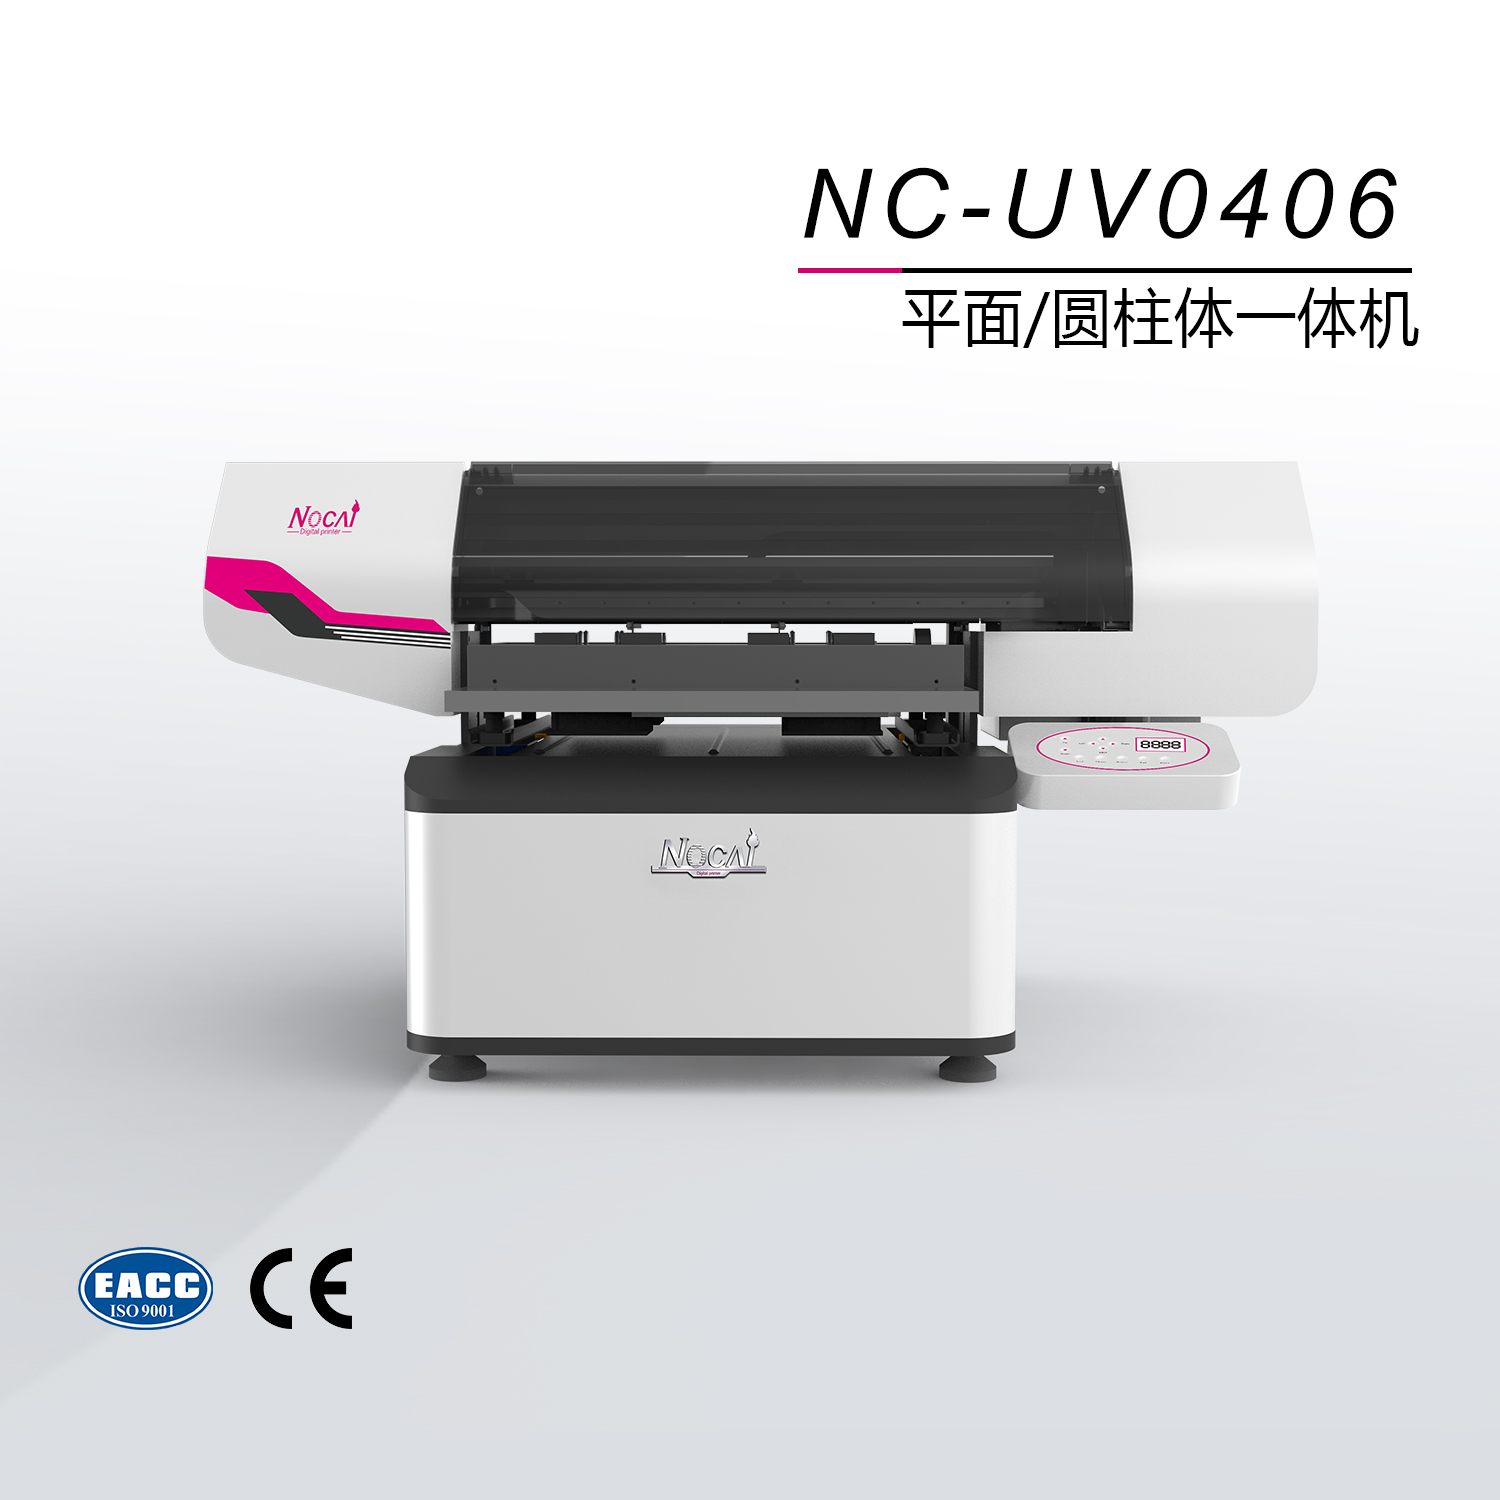 NC-UV0406 (第五代）-小型UV平板打印机